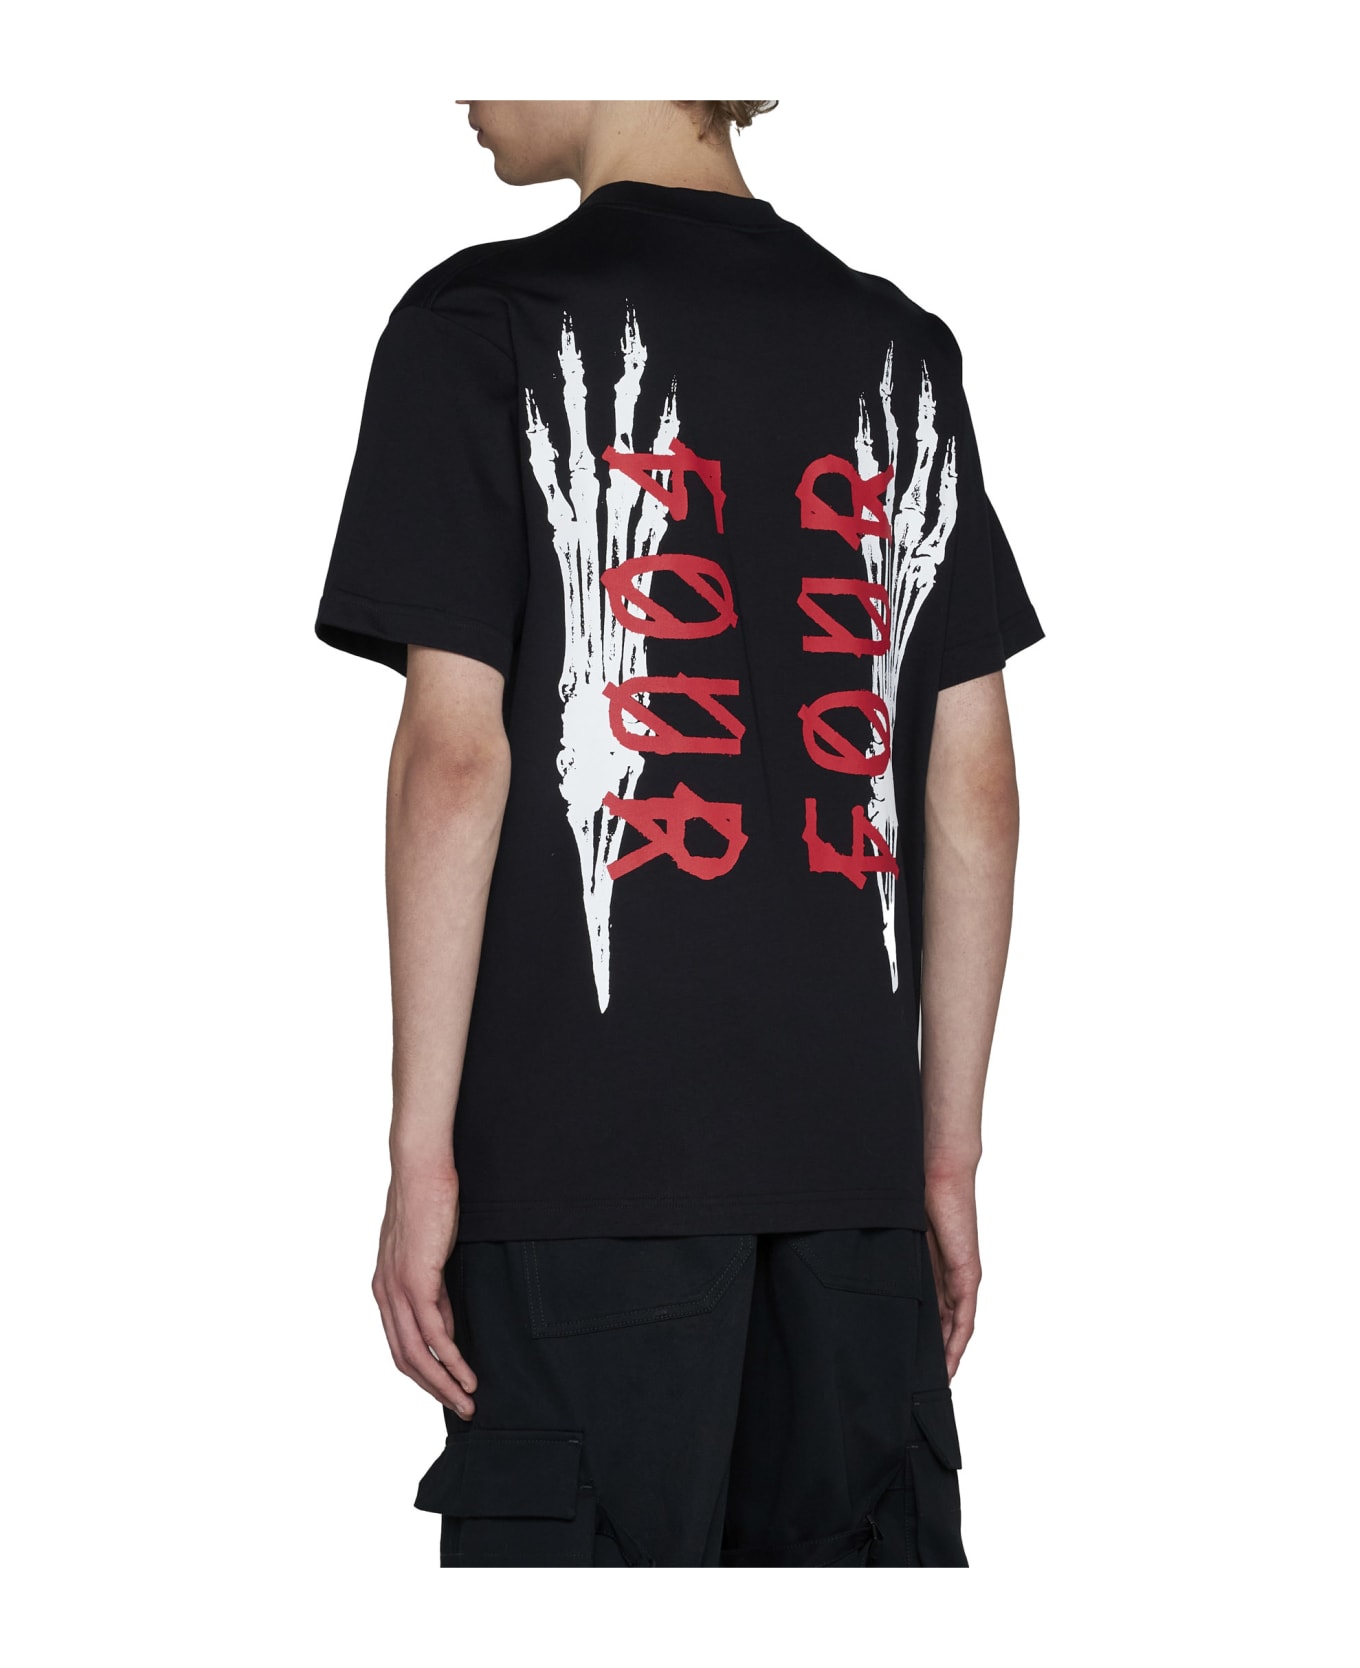 44 Label Group T-Shirt - Black+forever print シャツ